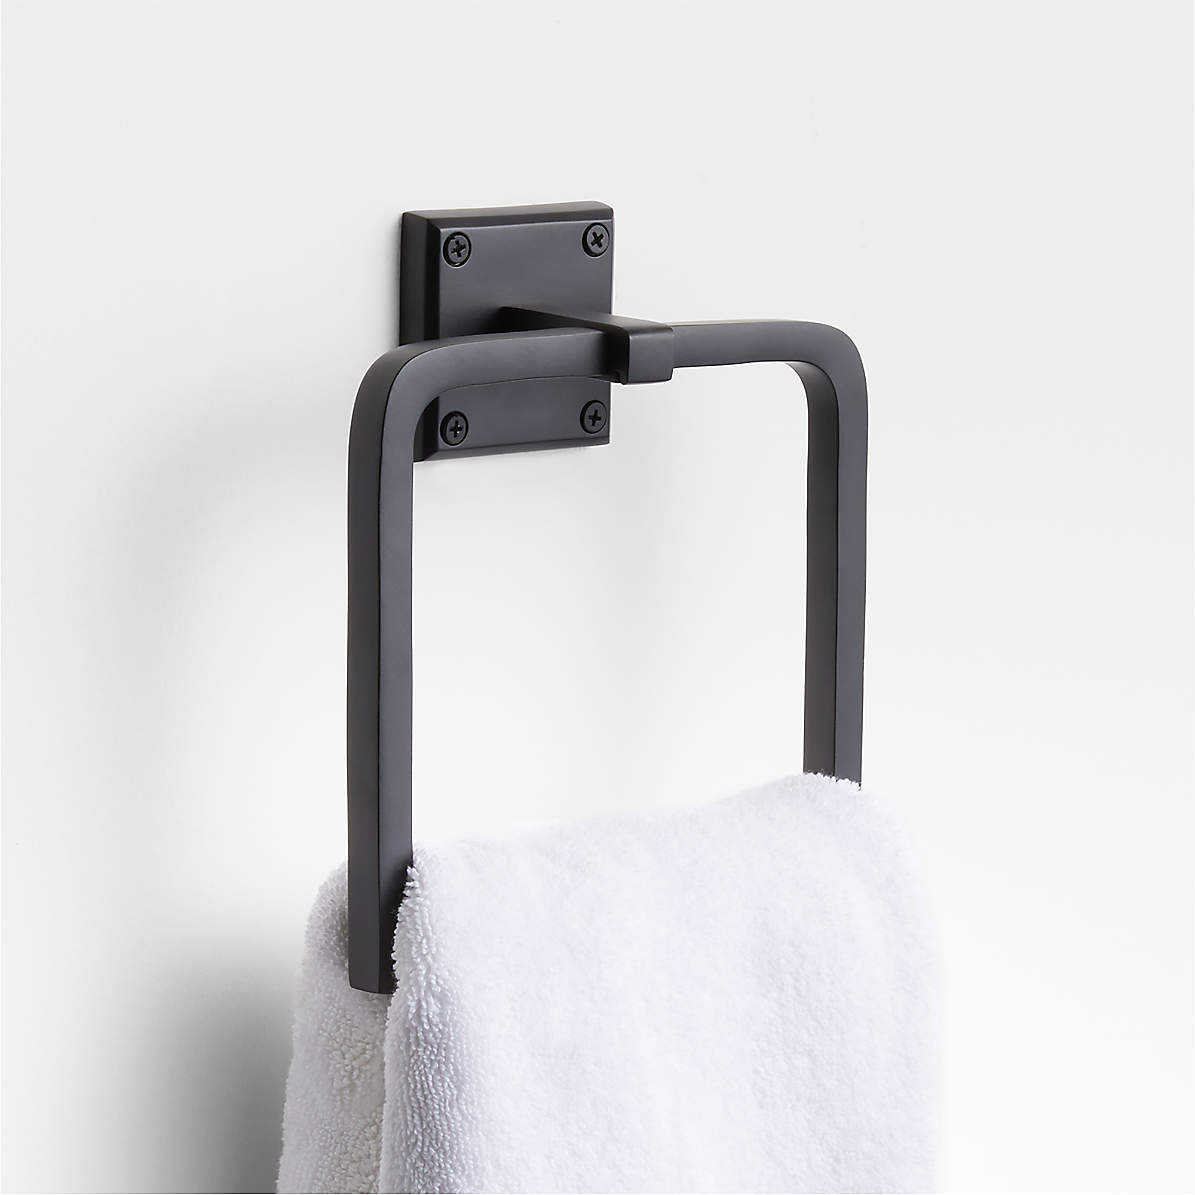 Small Black Adirondack Metal Wall Towel Rack - Towel Holder